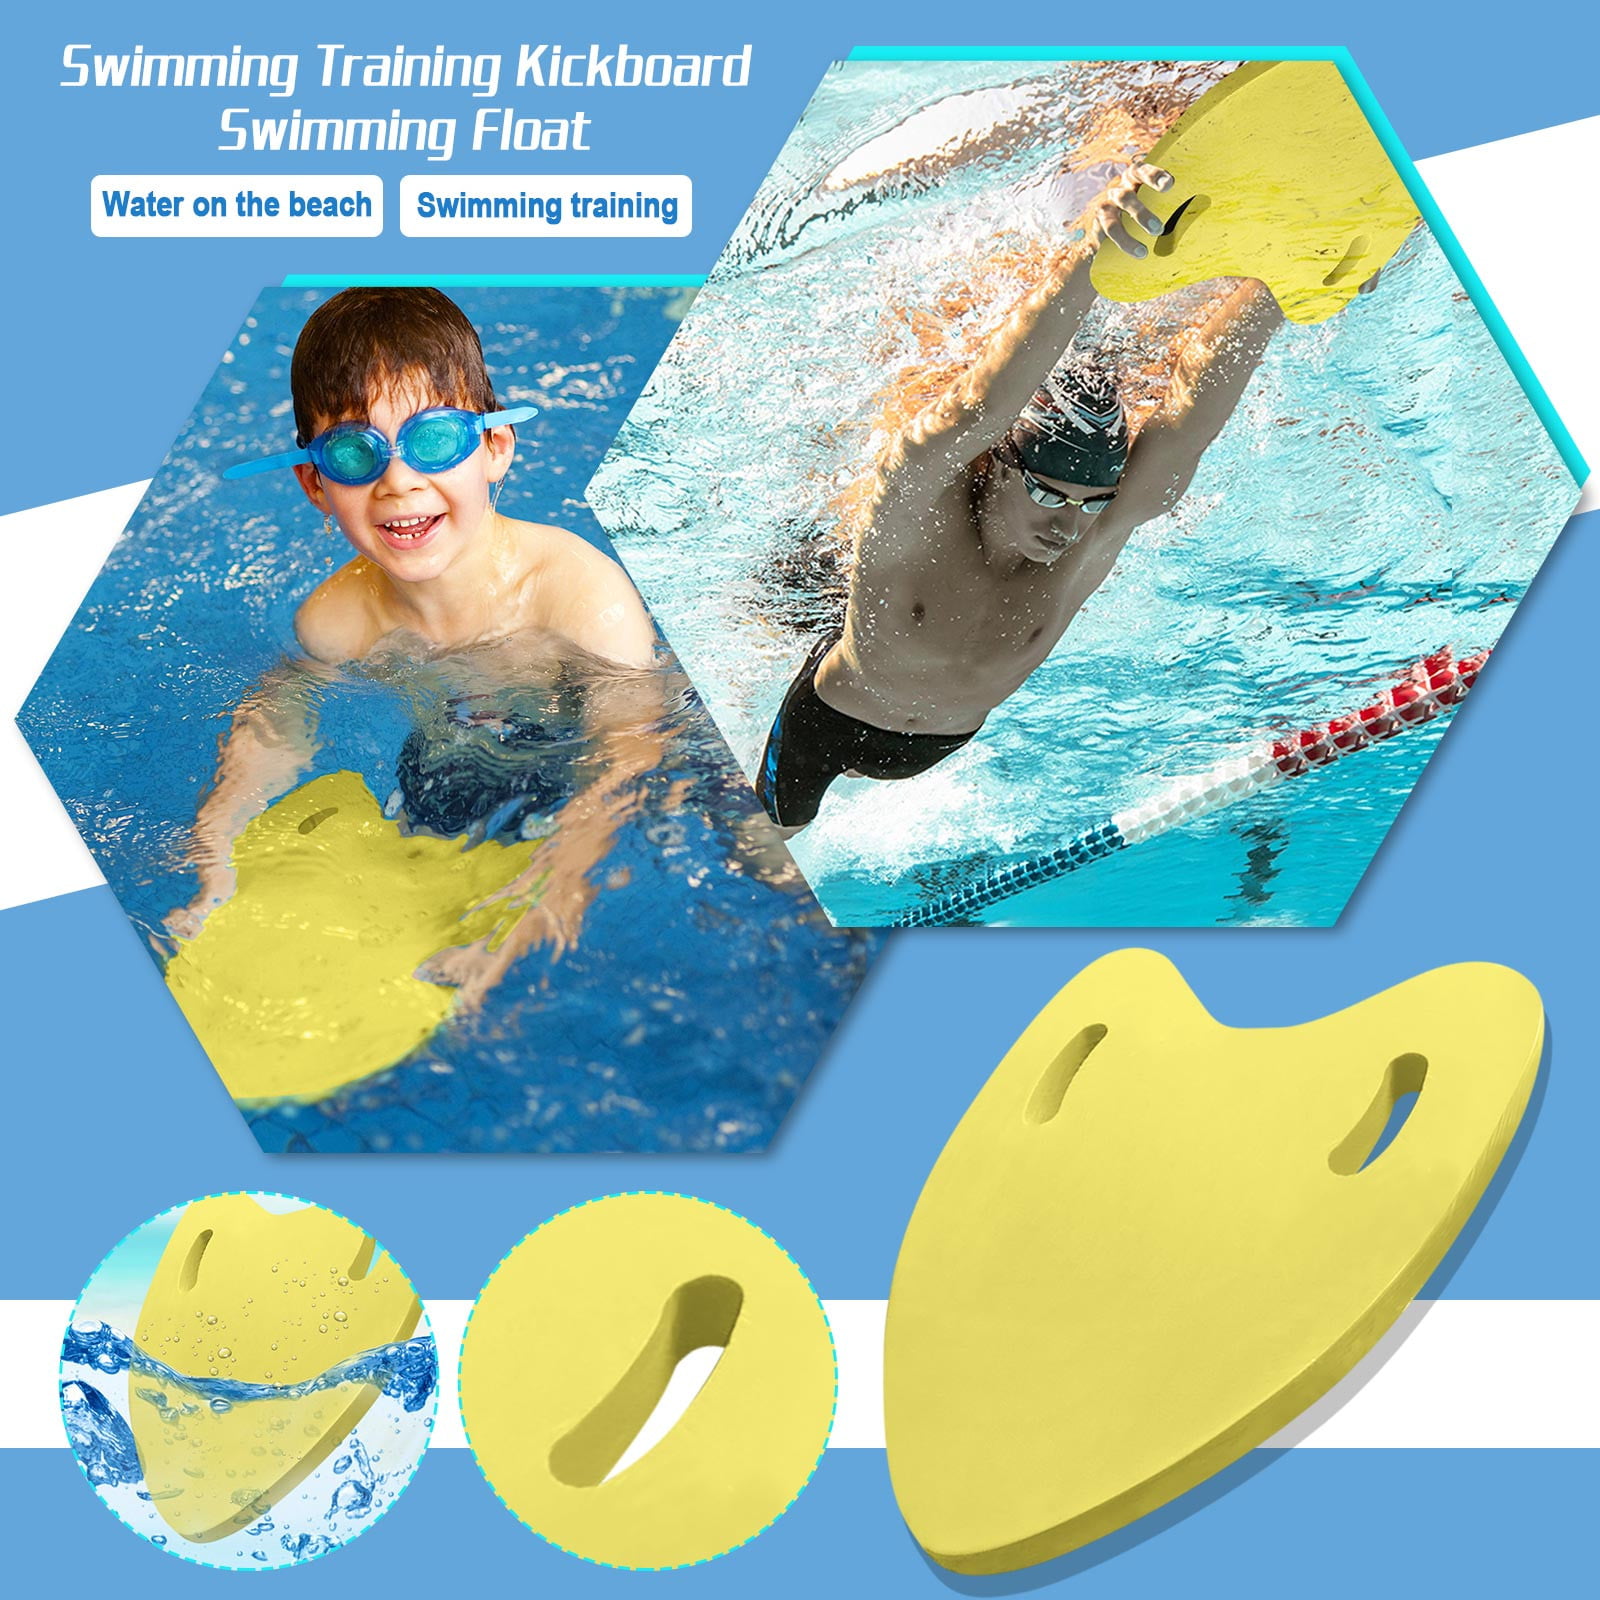 Swim Kickboard Swimming Training Aid for Kids and Adults 